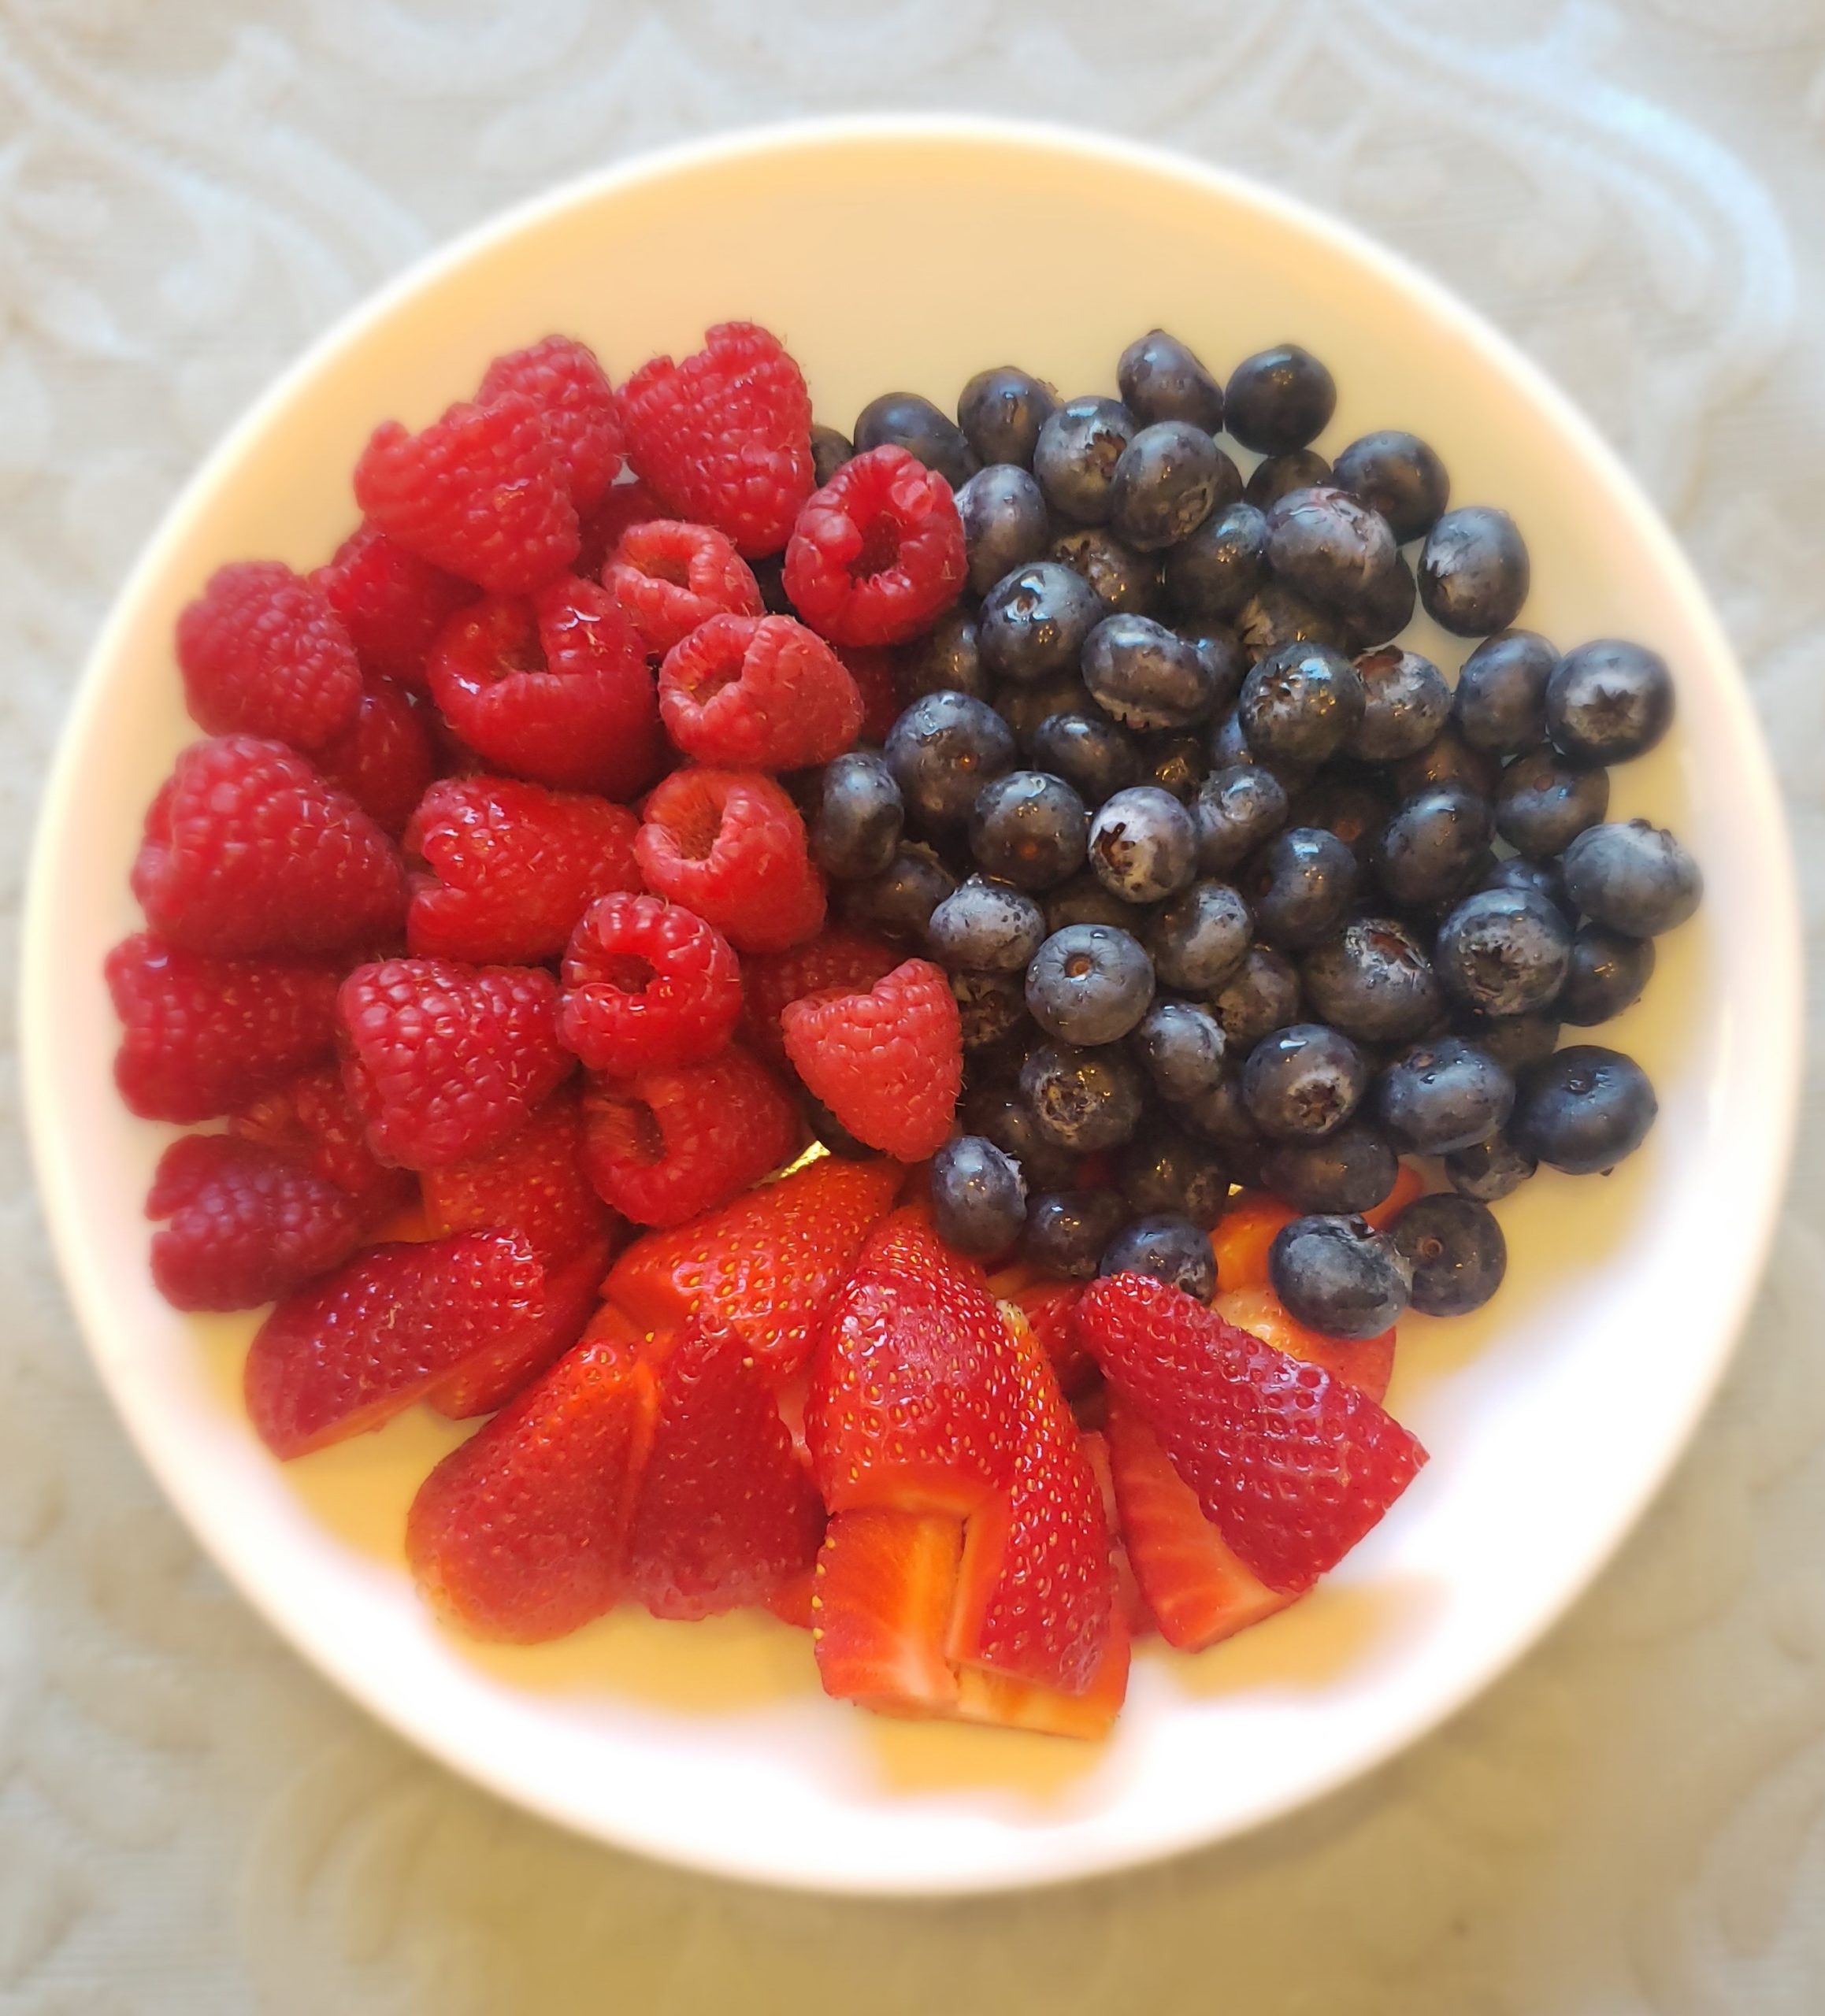 Antioxidants in berries can help immunity